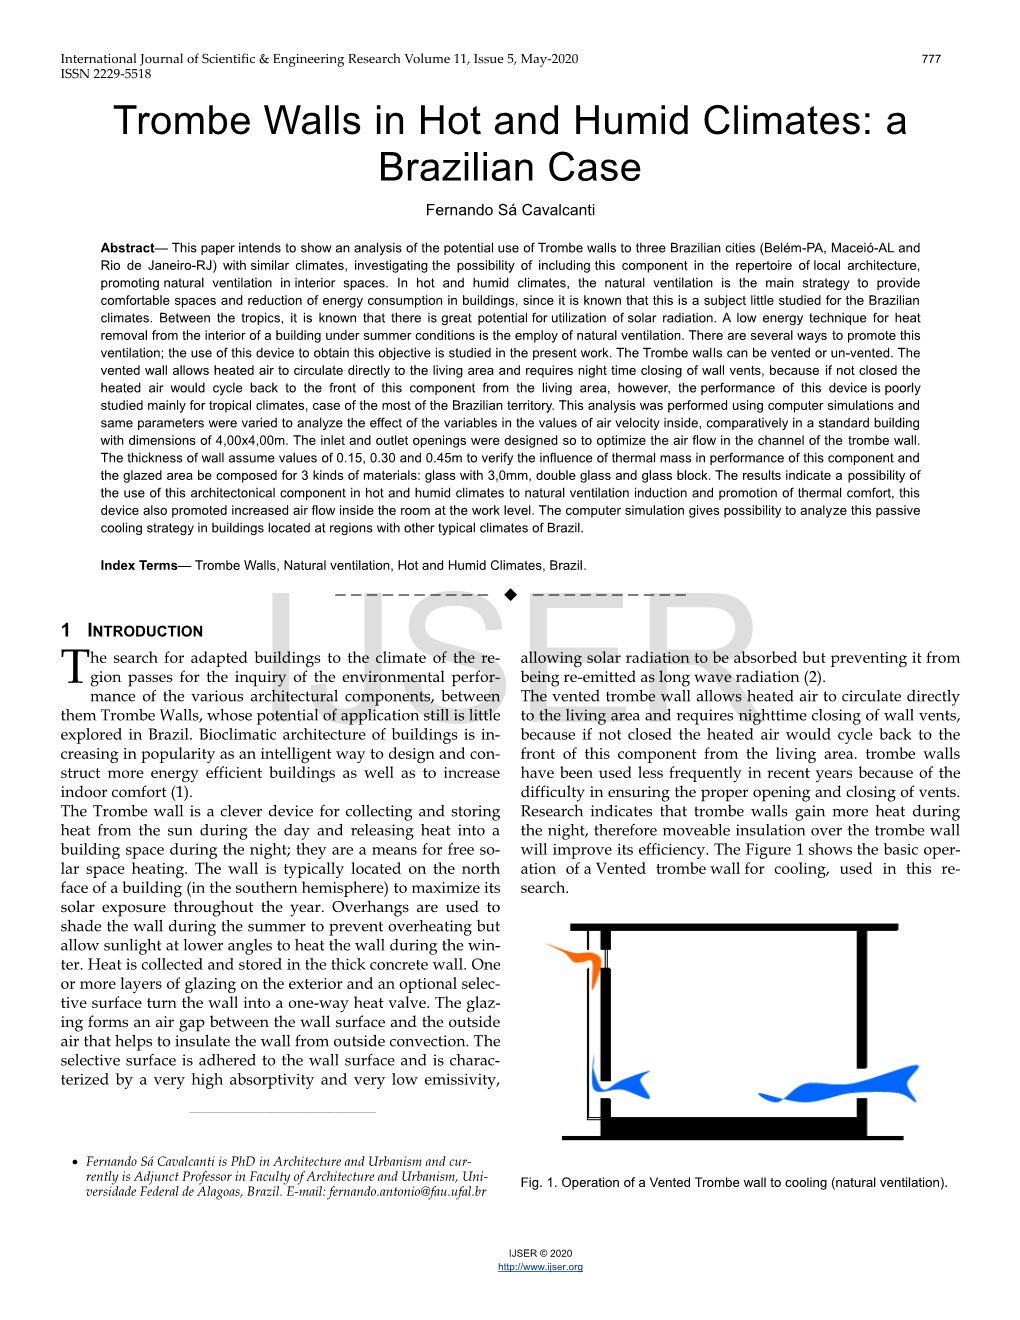 Trombe Walls in Hot and Humid Climates: a Brazilian Case Fernando Sá Cavalcanti